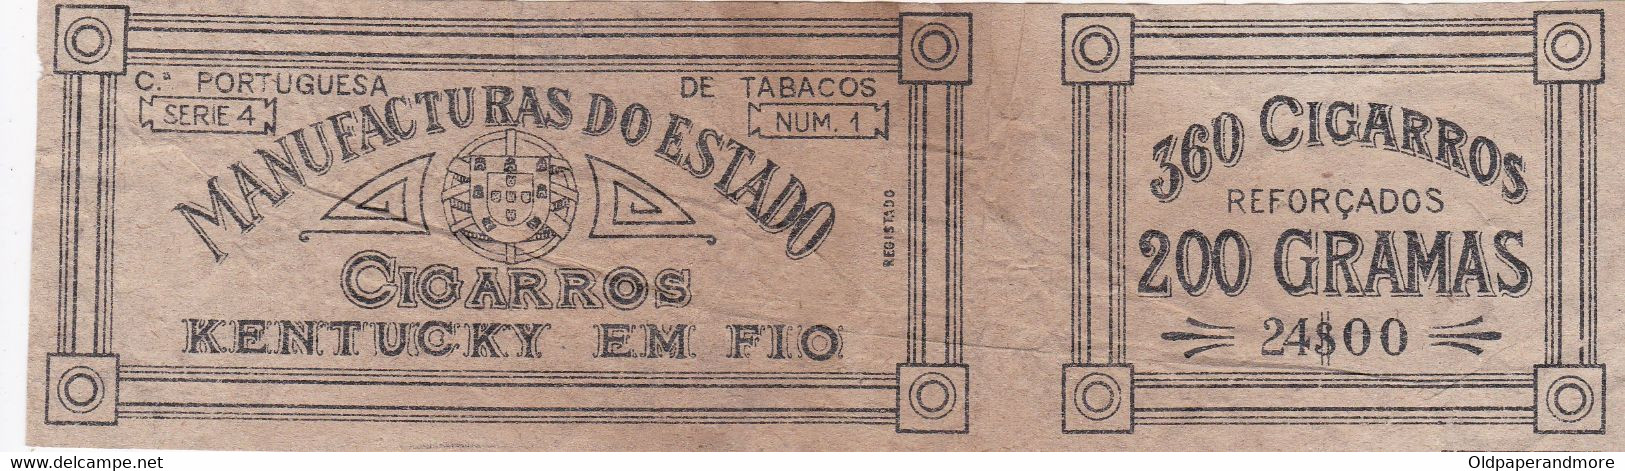 My Box 2 - PORTUGAL - LABEL - CIGARROS KENTUCKY - OLD CIGAR LABEL - TOBACCO LABEL - Etiquetas